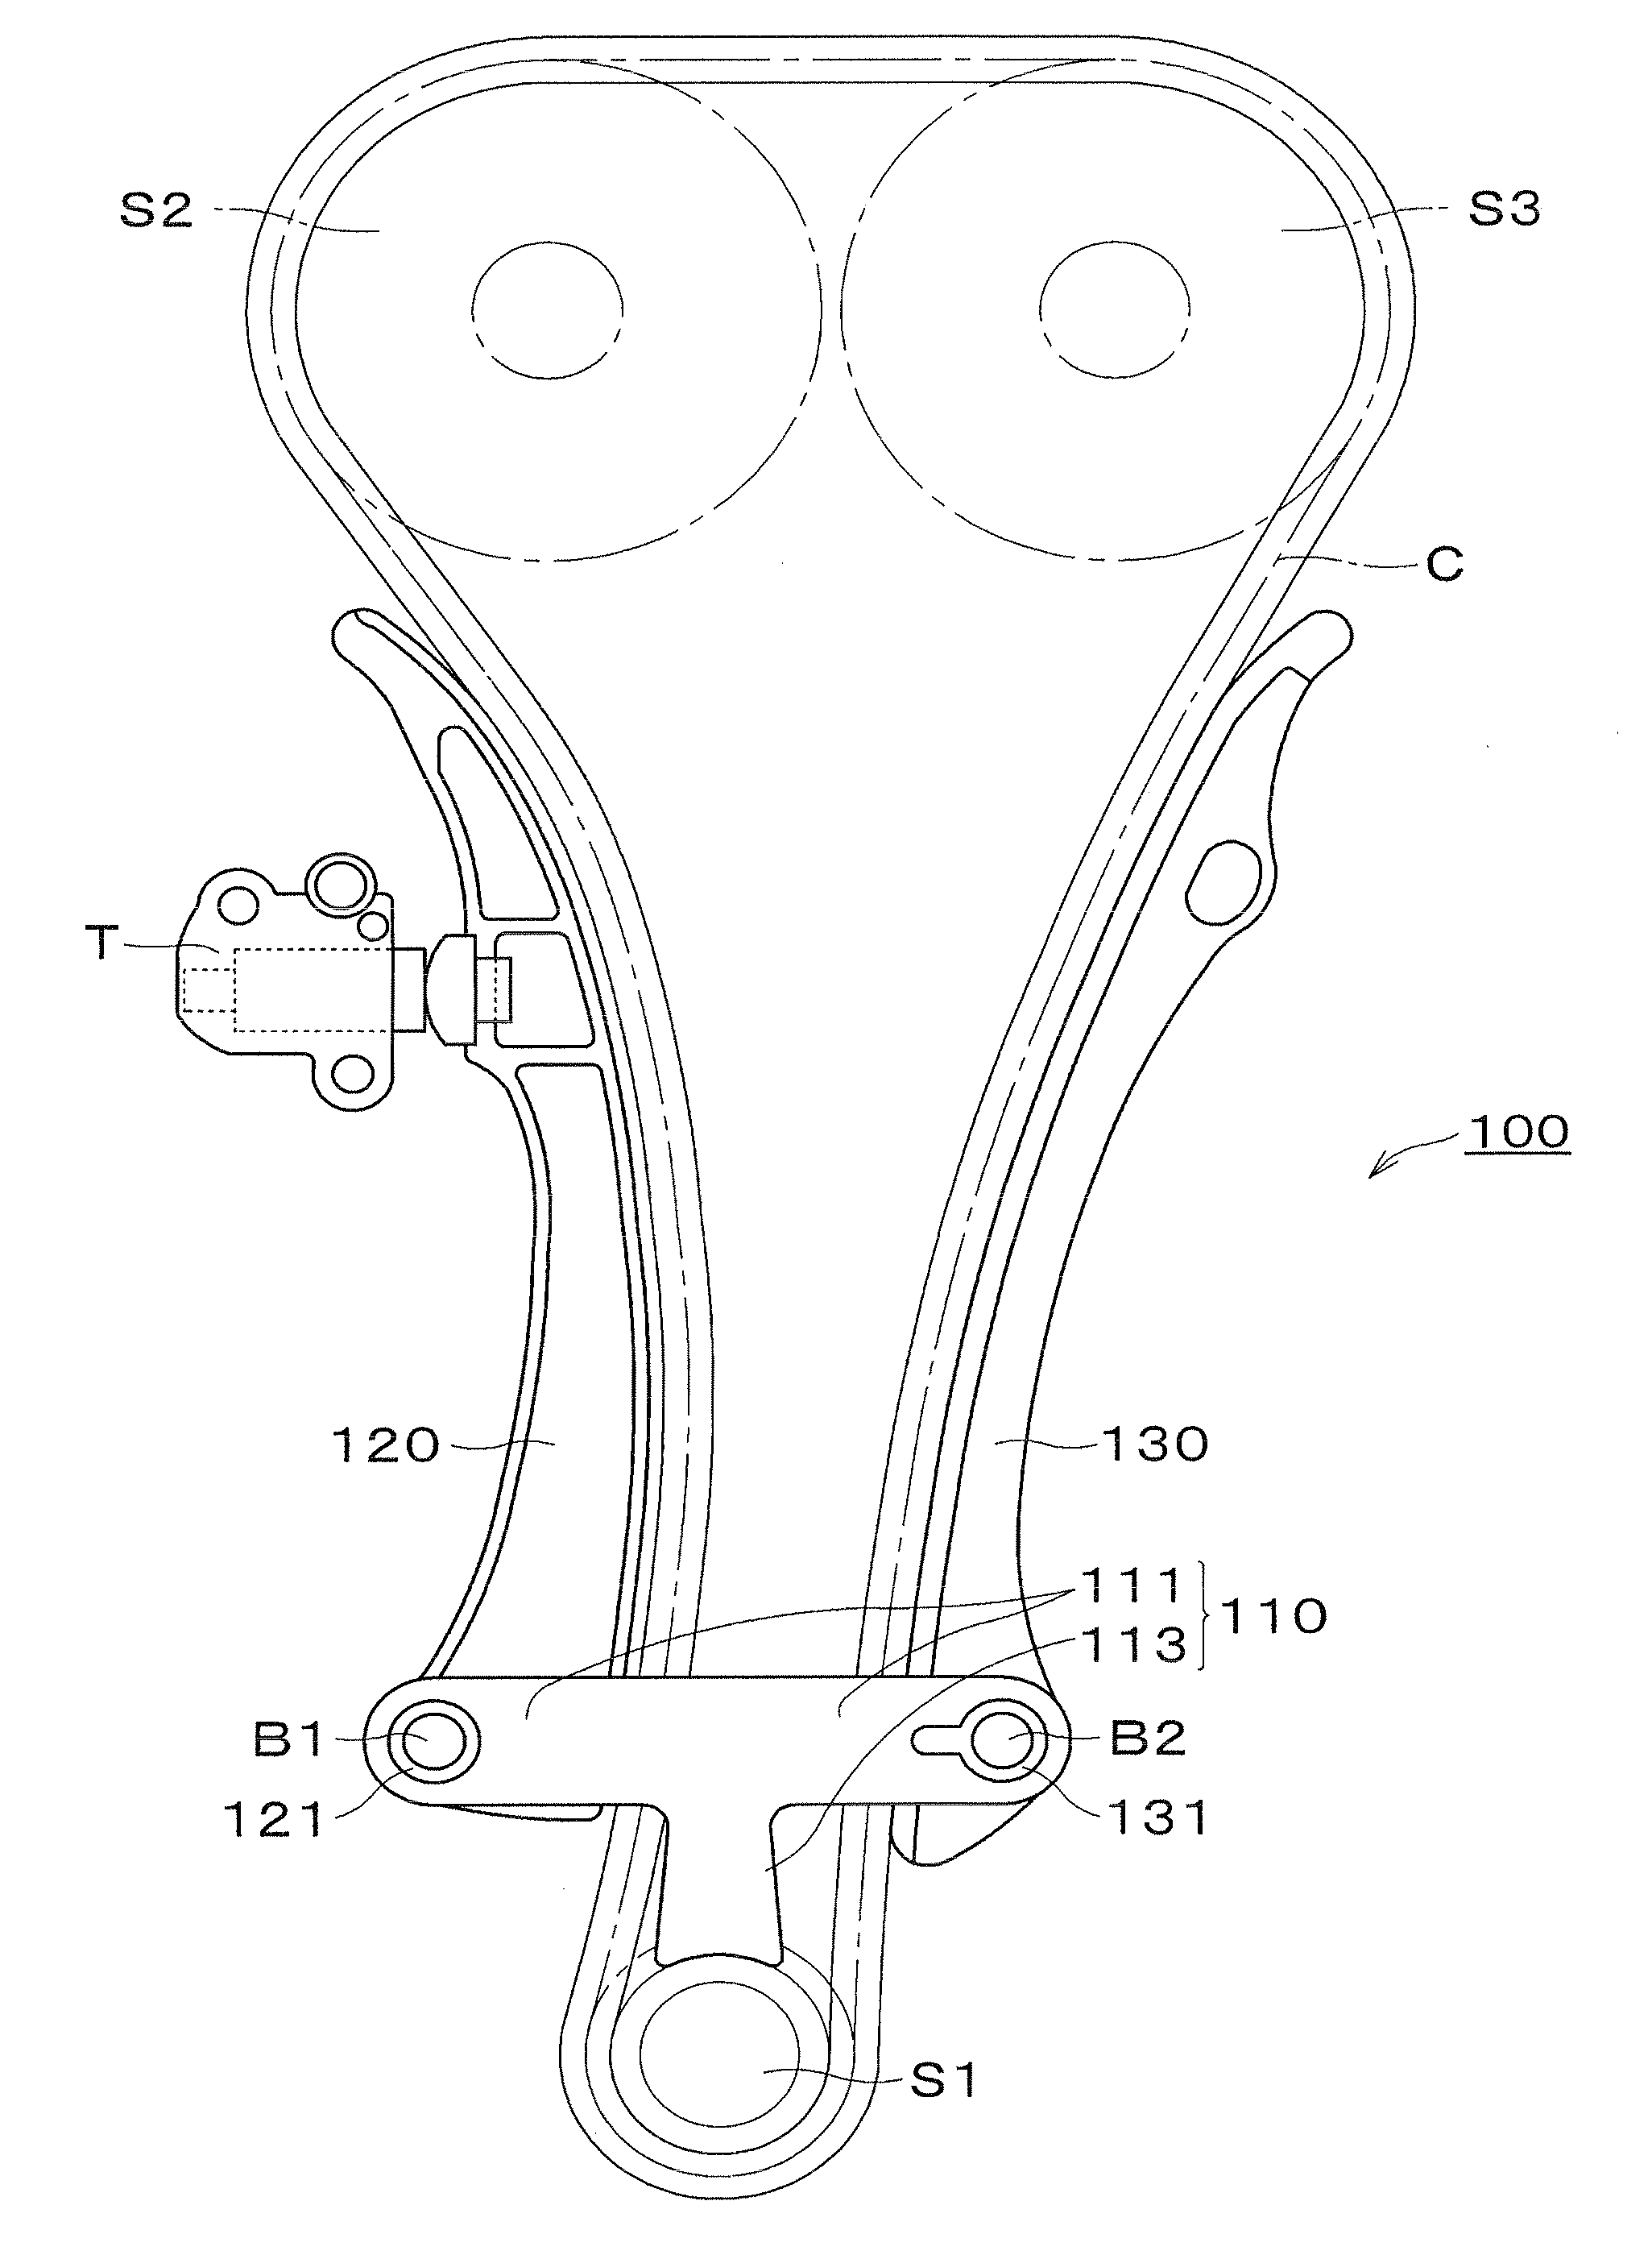 Chain guide mechanism